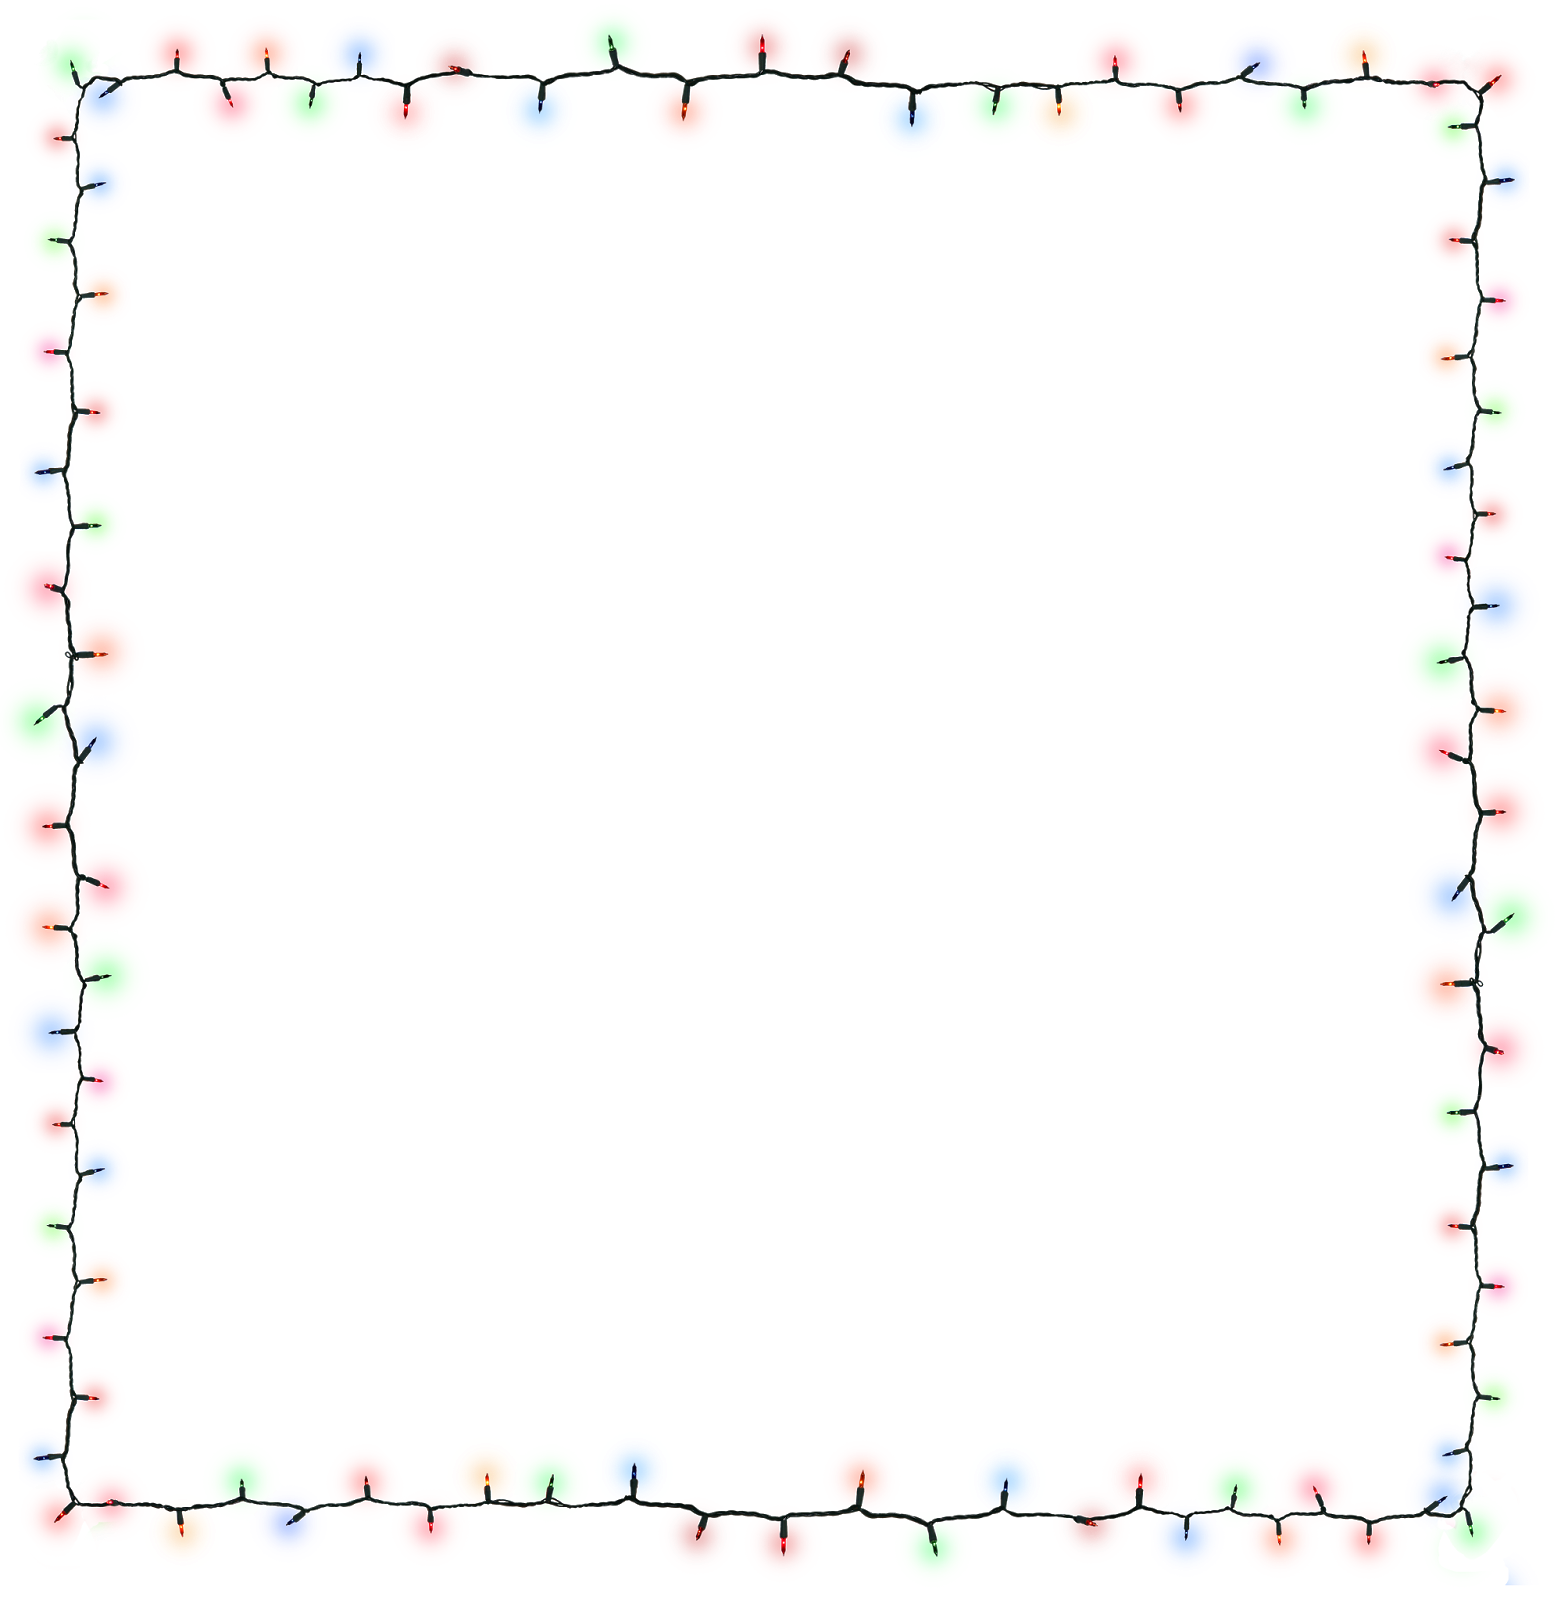 Christmas Lights Frame Download PNG Image